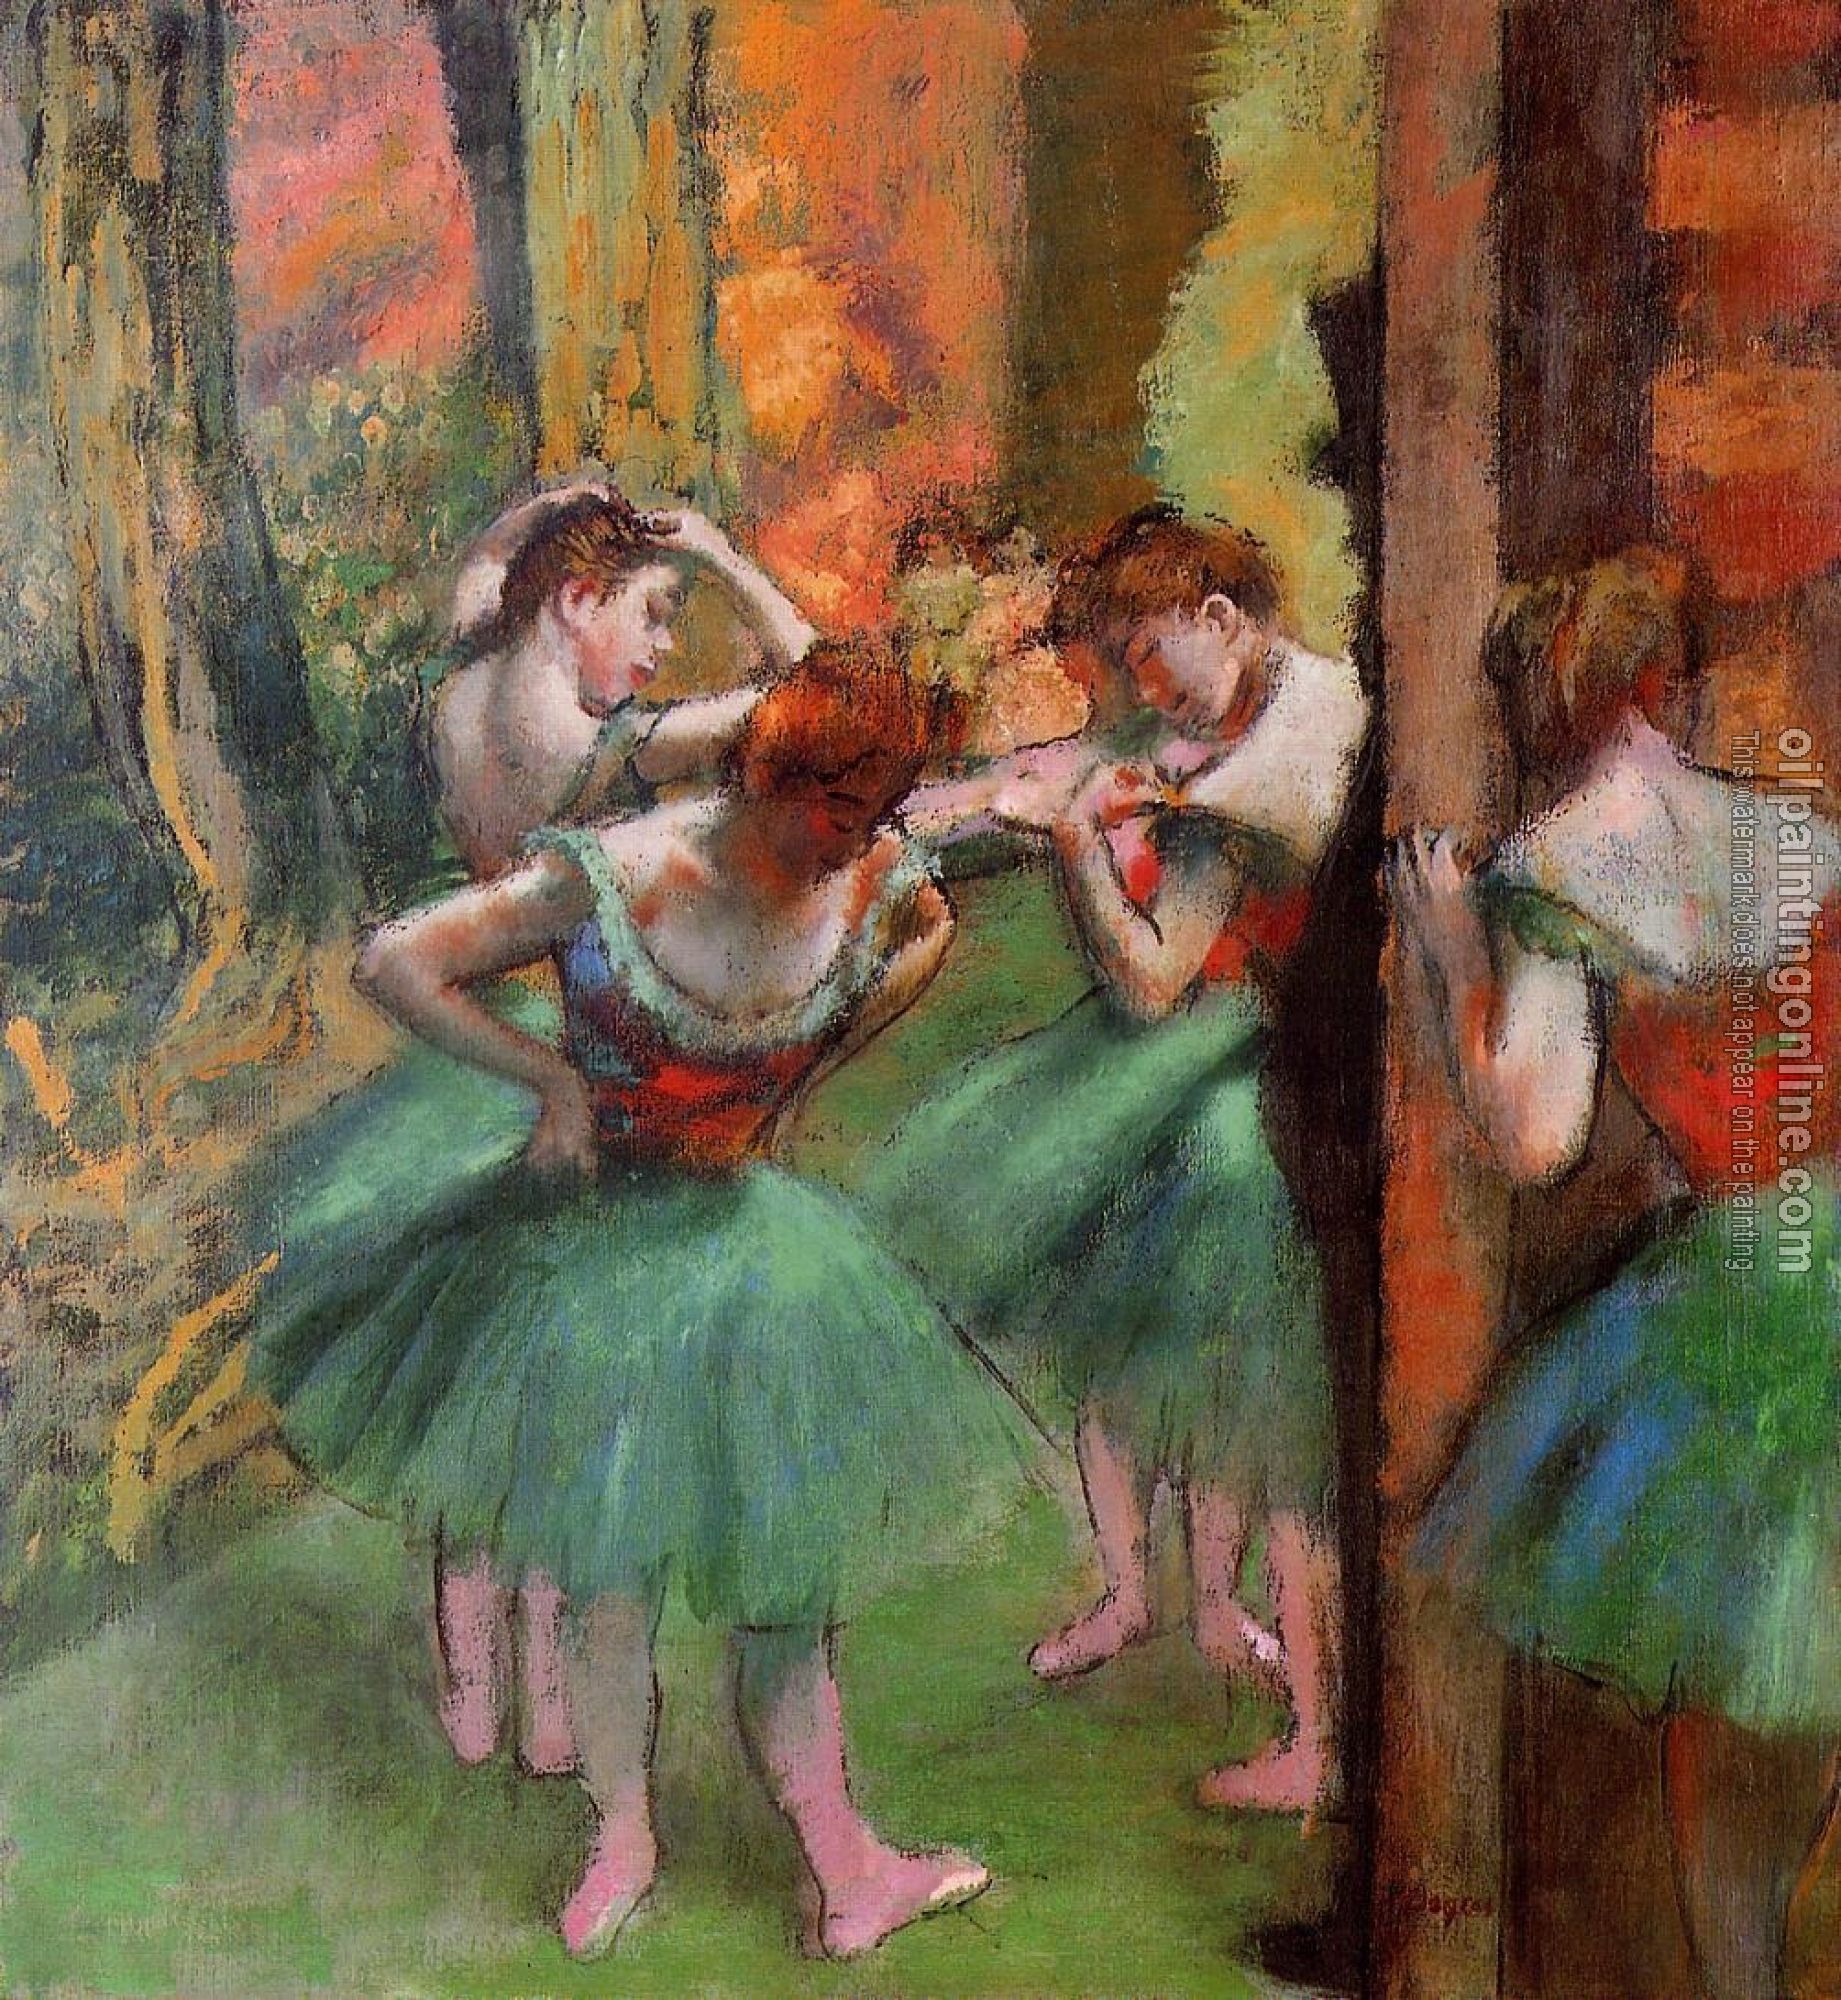 Degas, Edgar - Dancers, Pink and Green